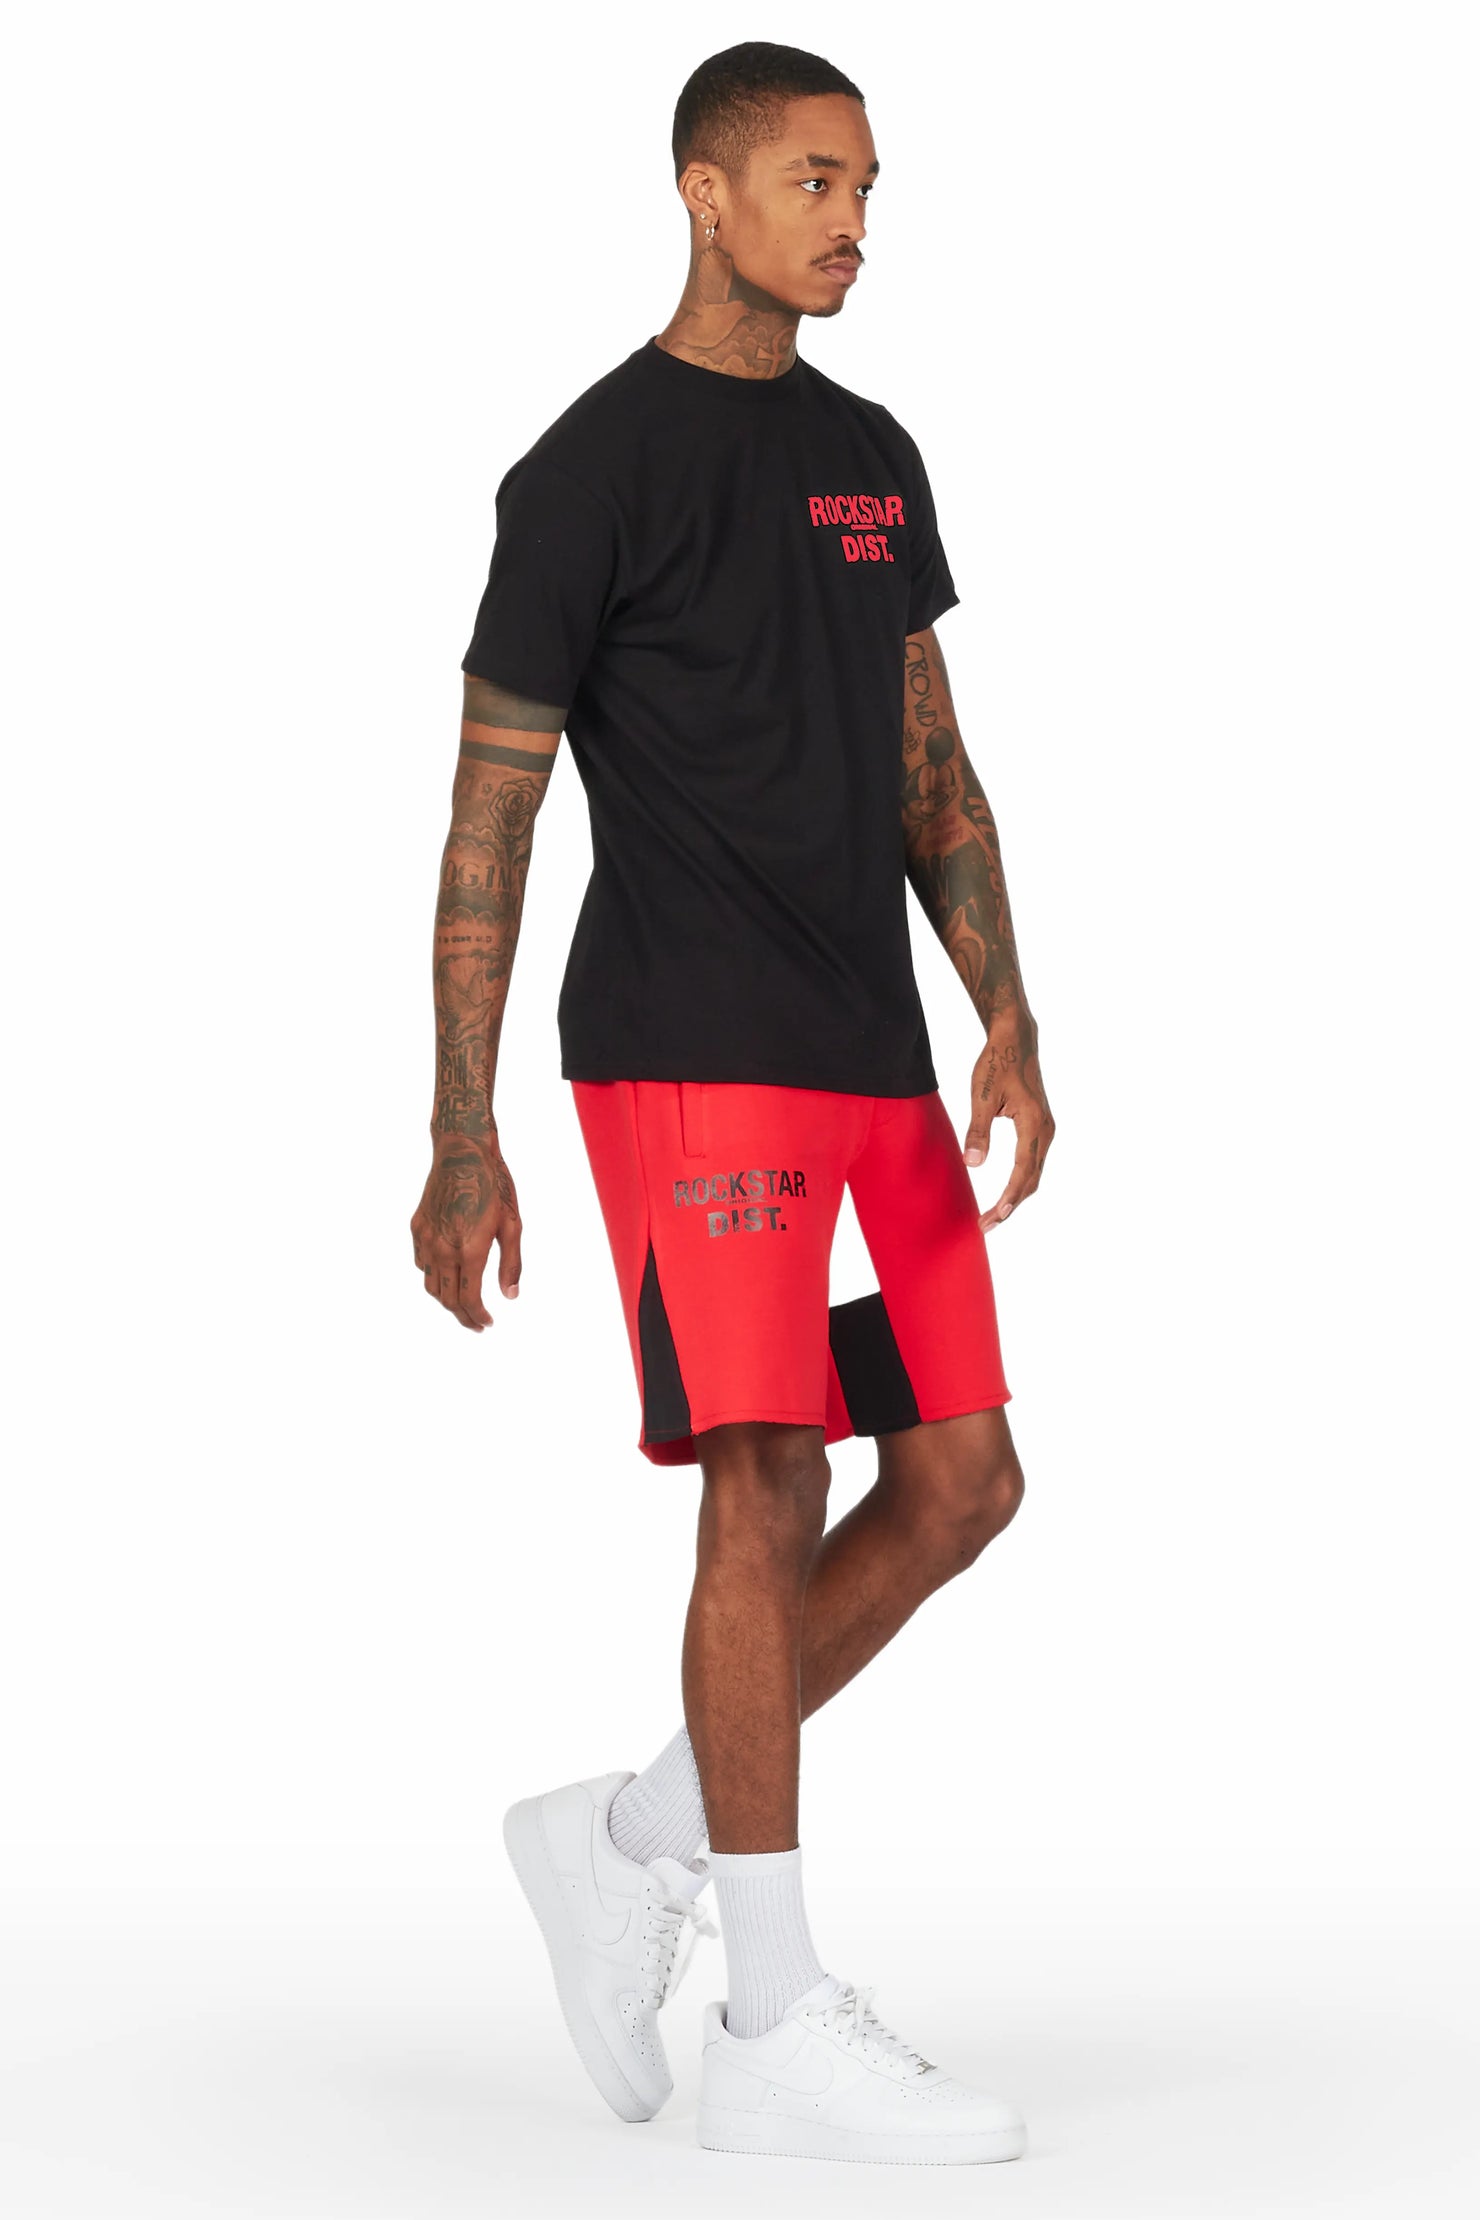 Buck 3.0 Black/Red T-Shirt Short Set